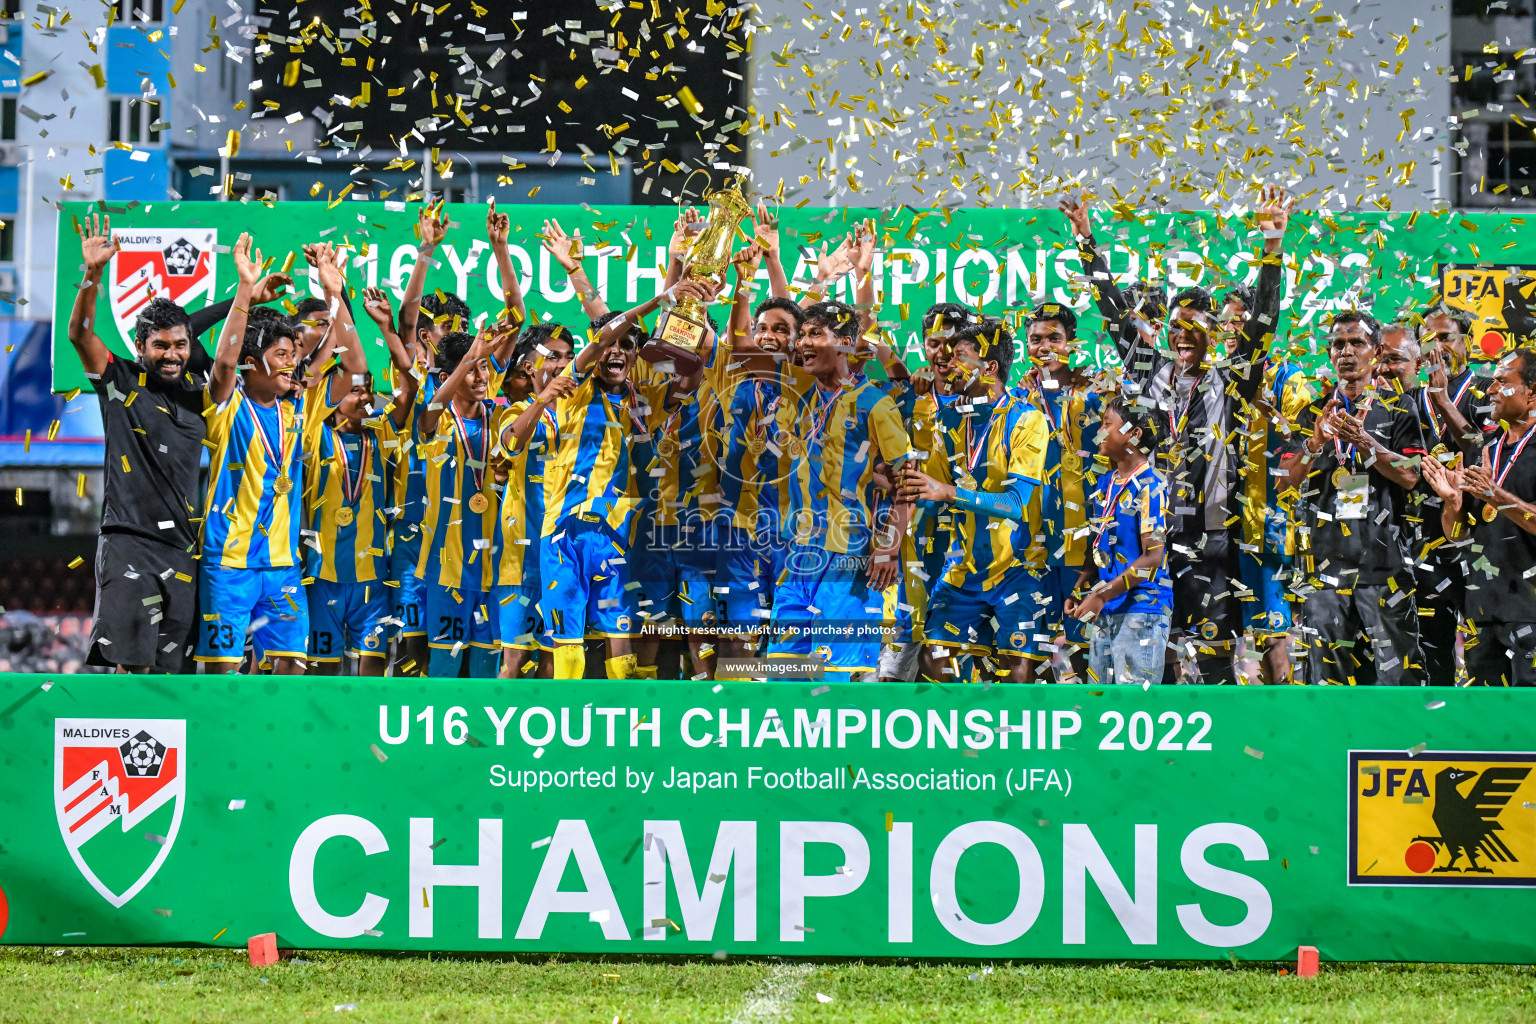 U16 Youth Championship Final held on 03rd July 2022 in National Football Stadium, Male', Maldives Photos by Nausham Waheed